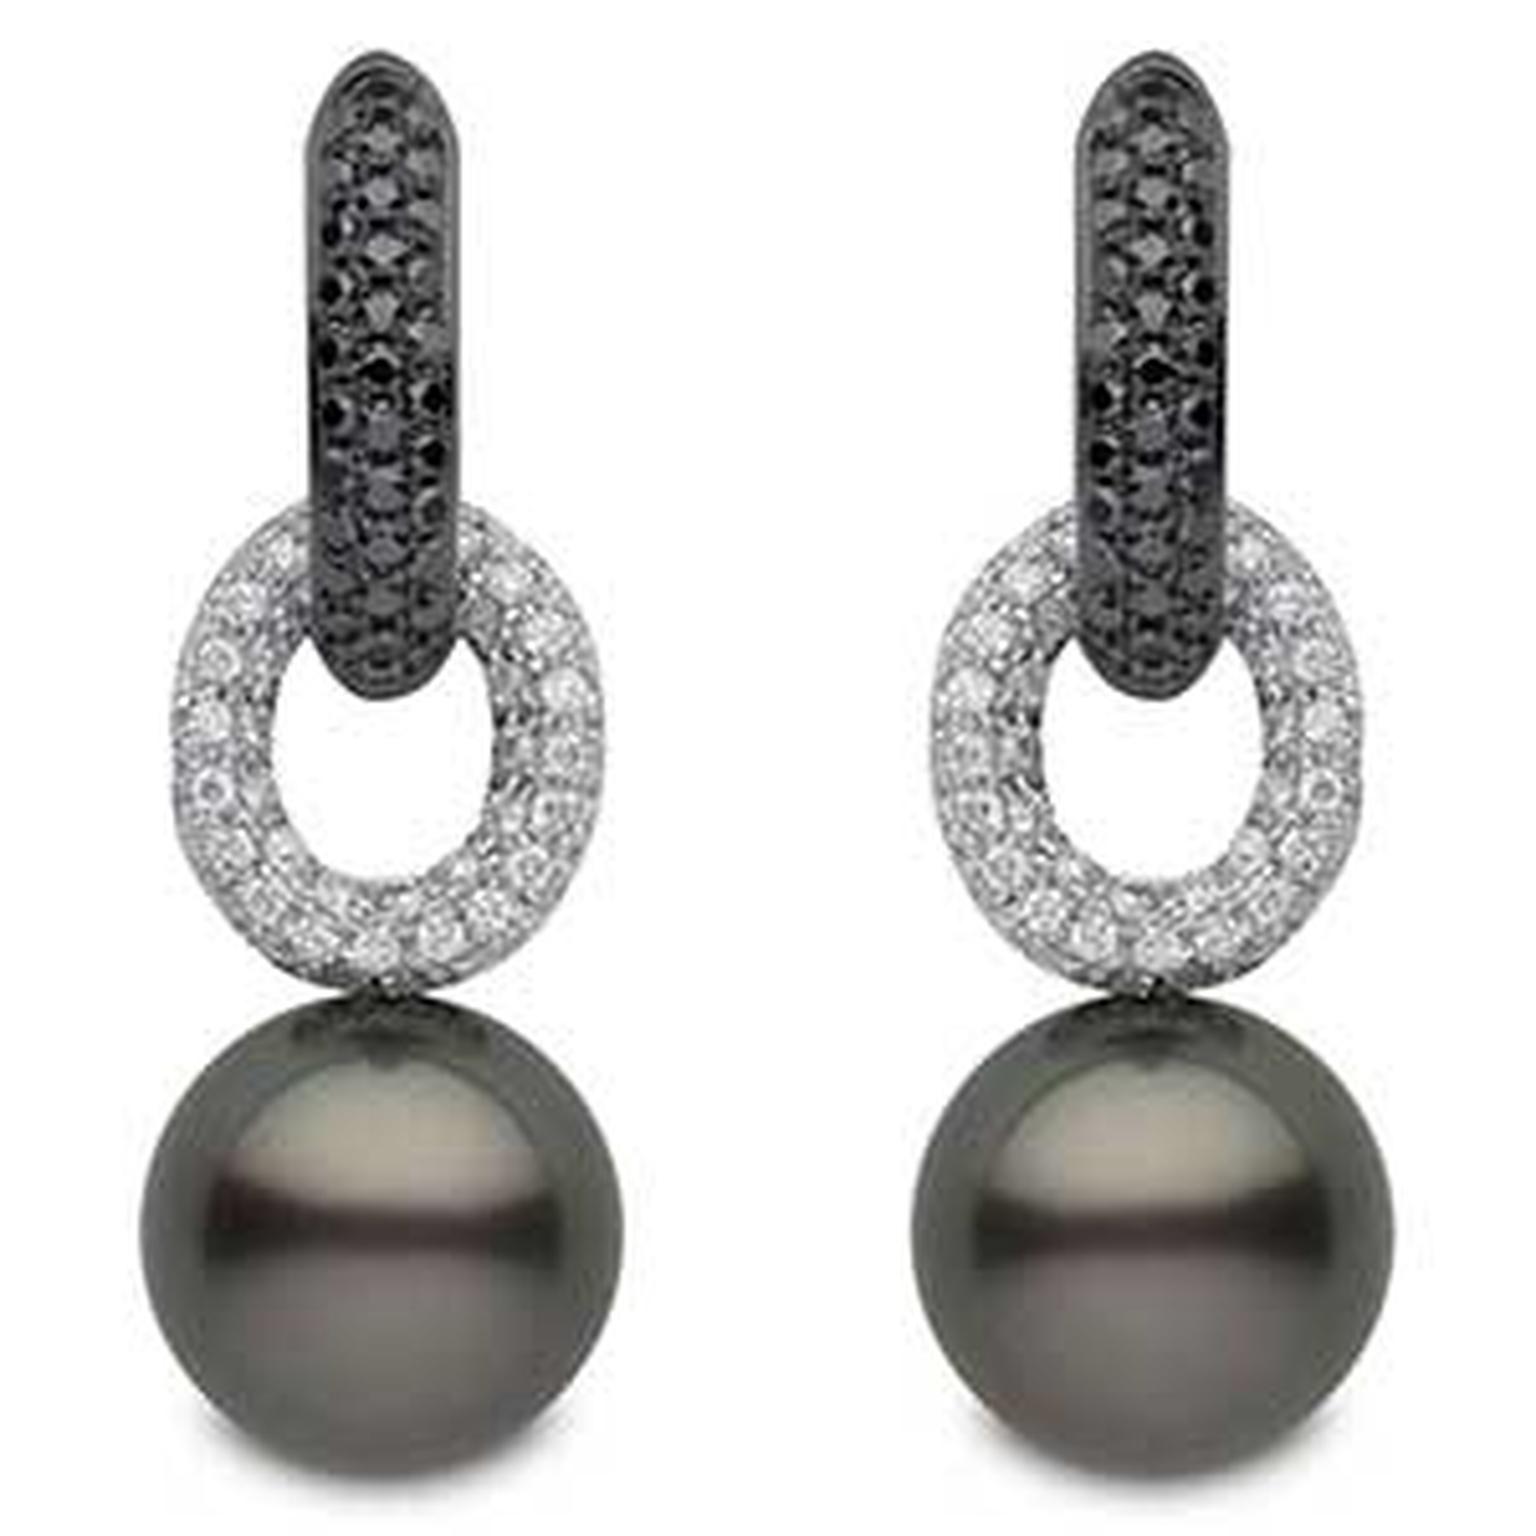 Yoko London pearl earrings